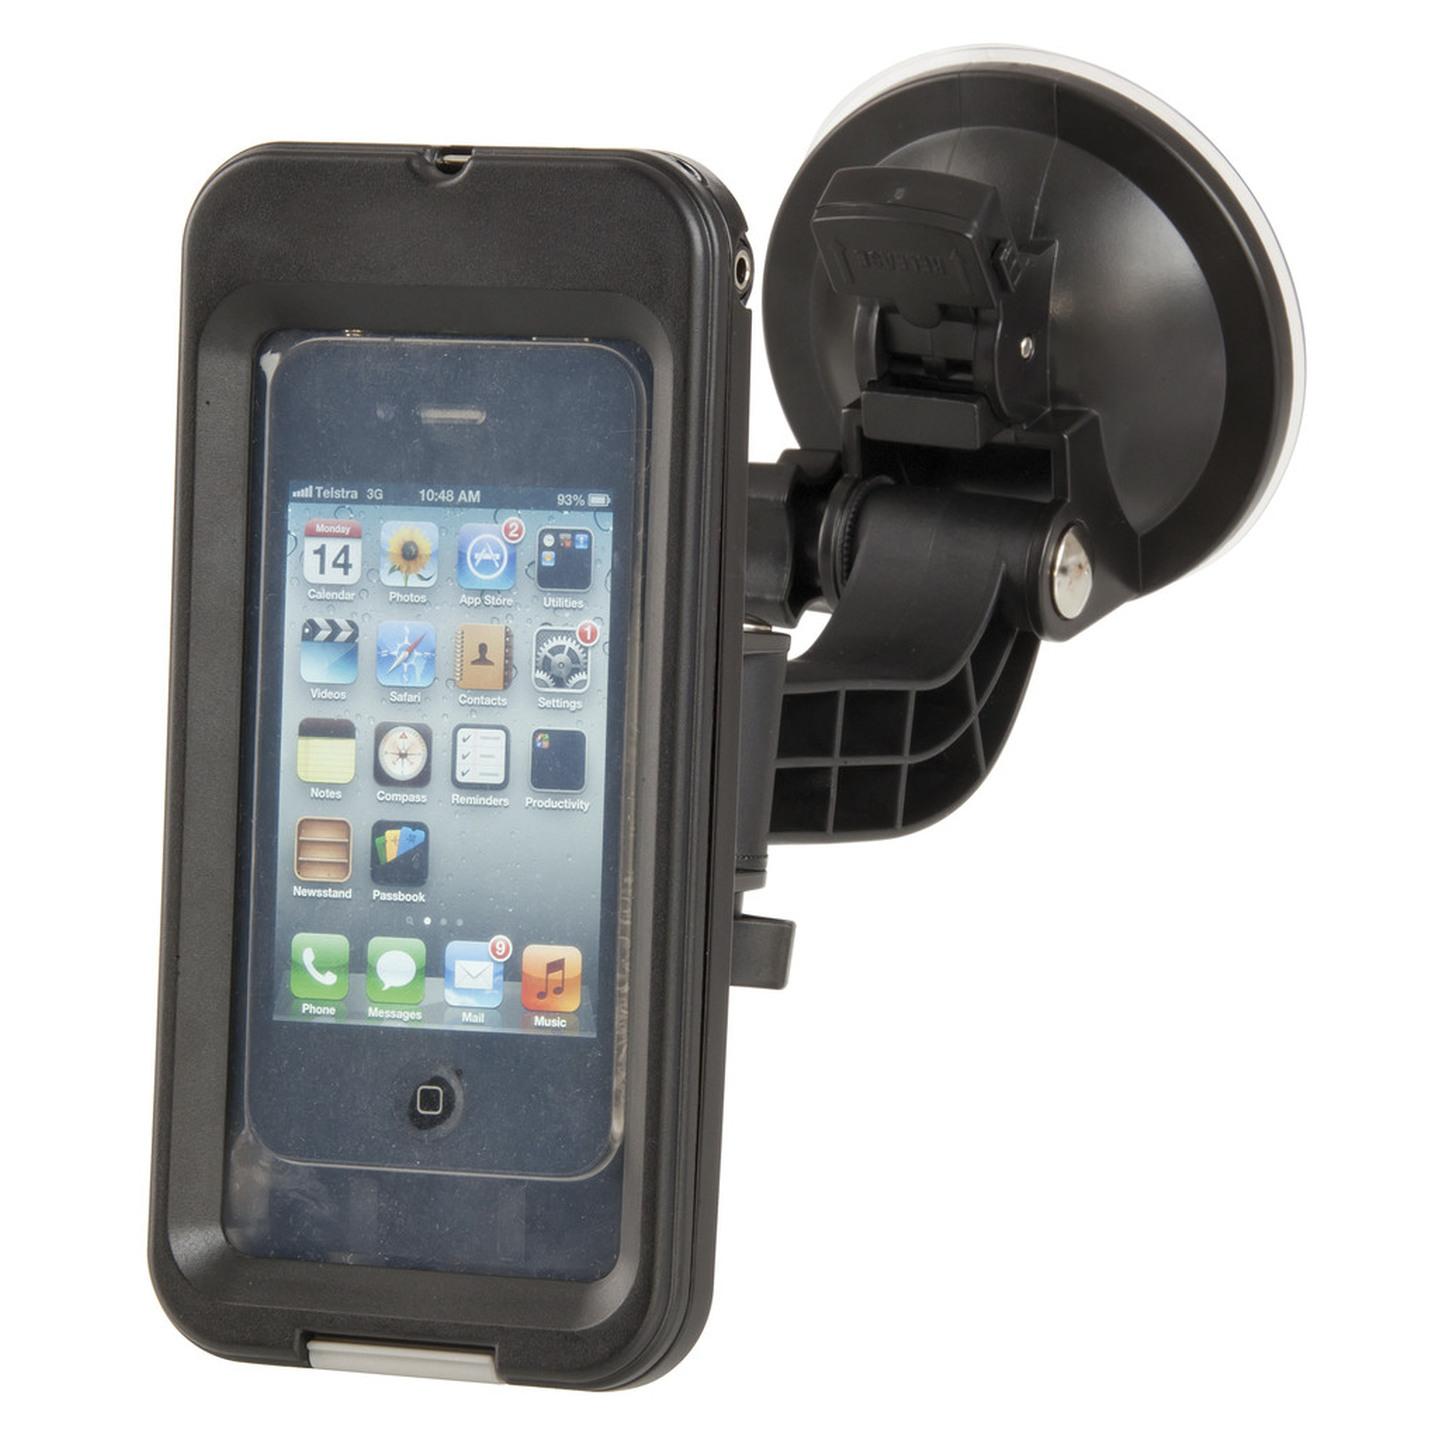 Smartphone Waterproof Case with Windscreen and Bike Mount